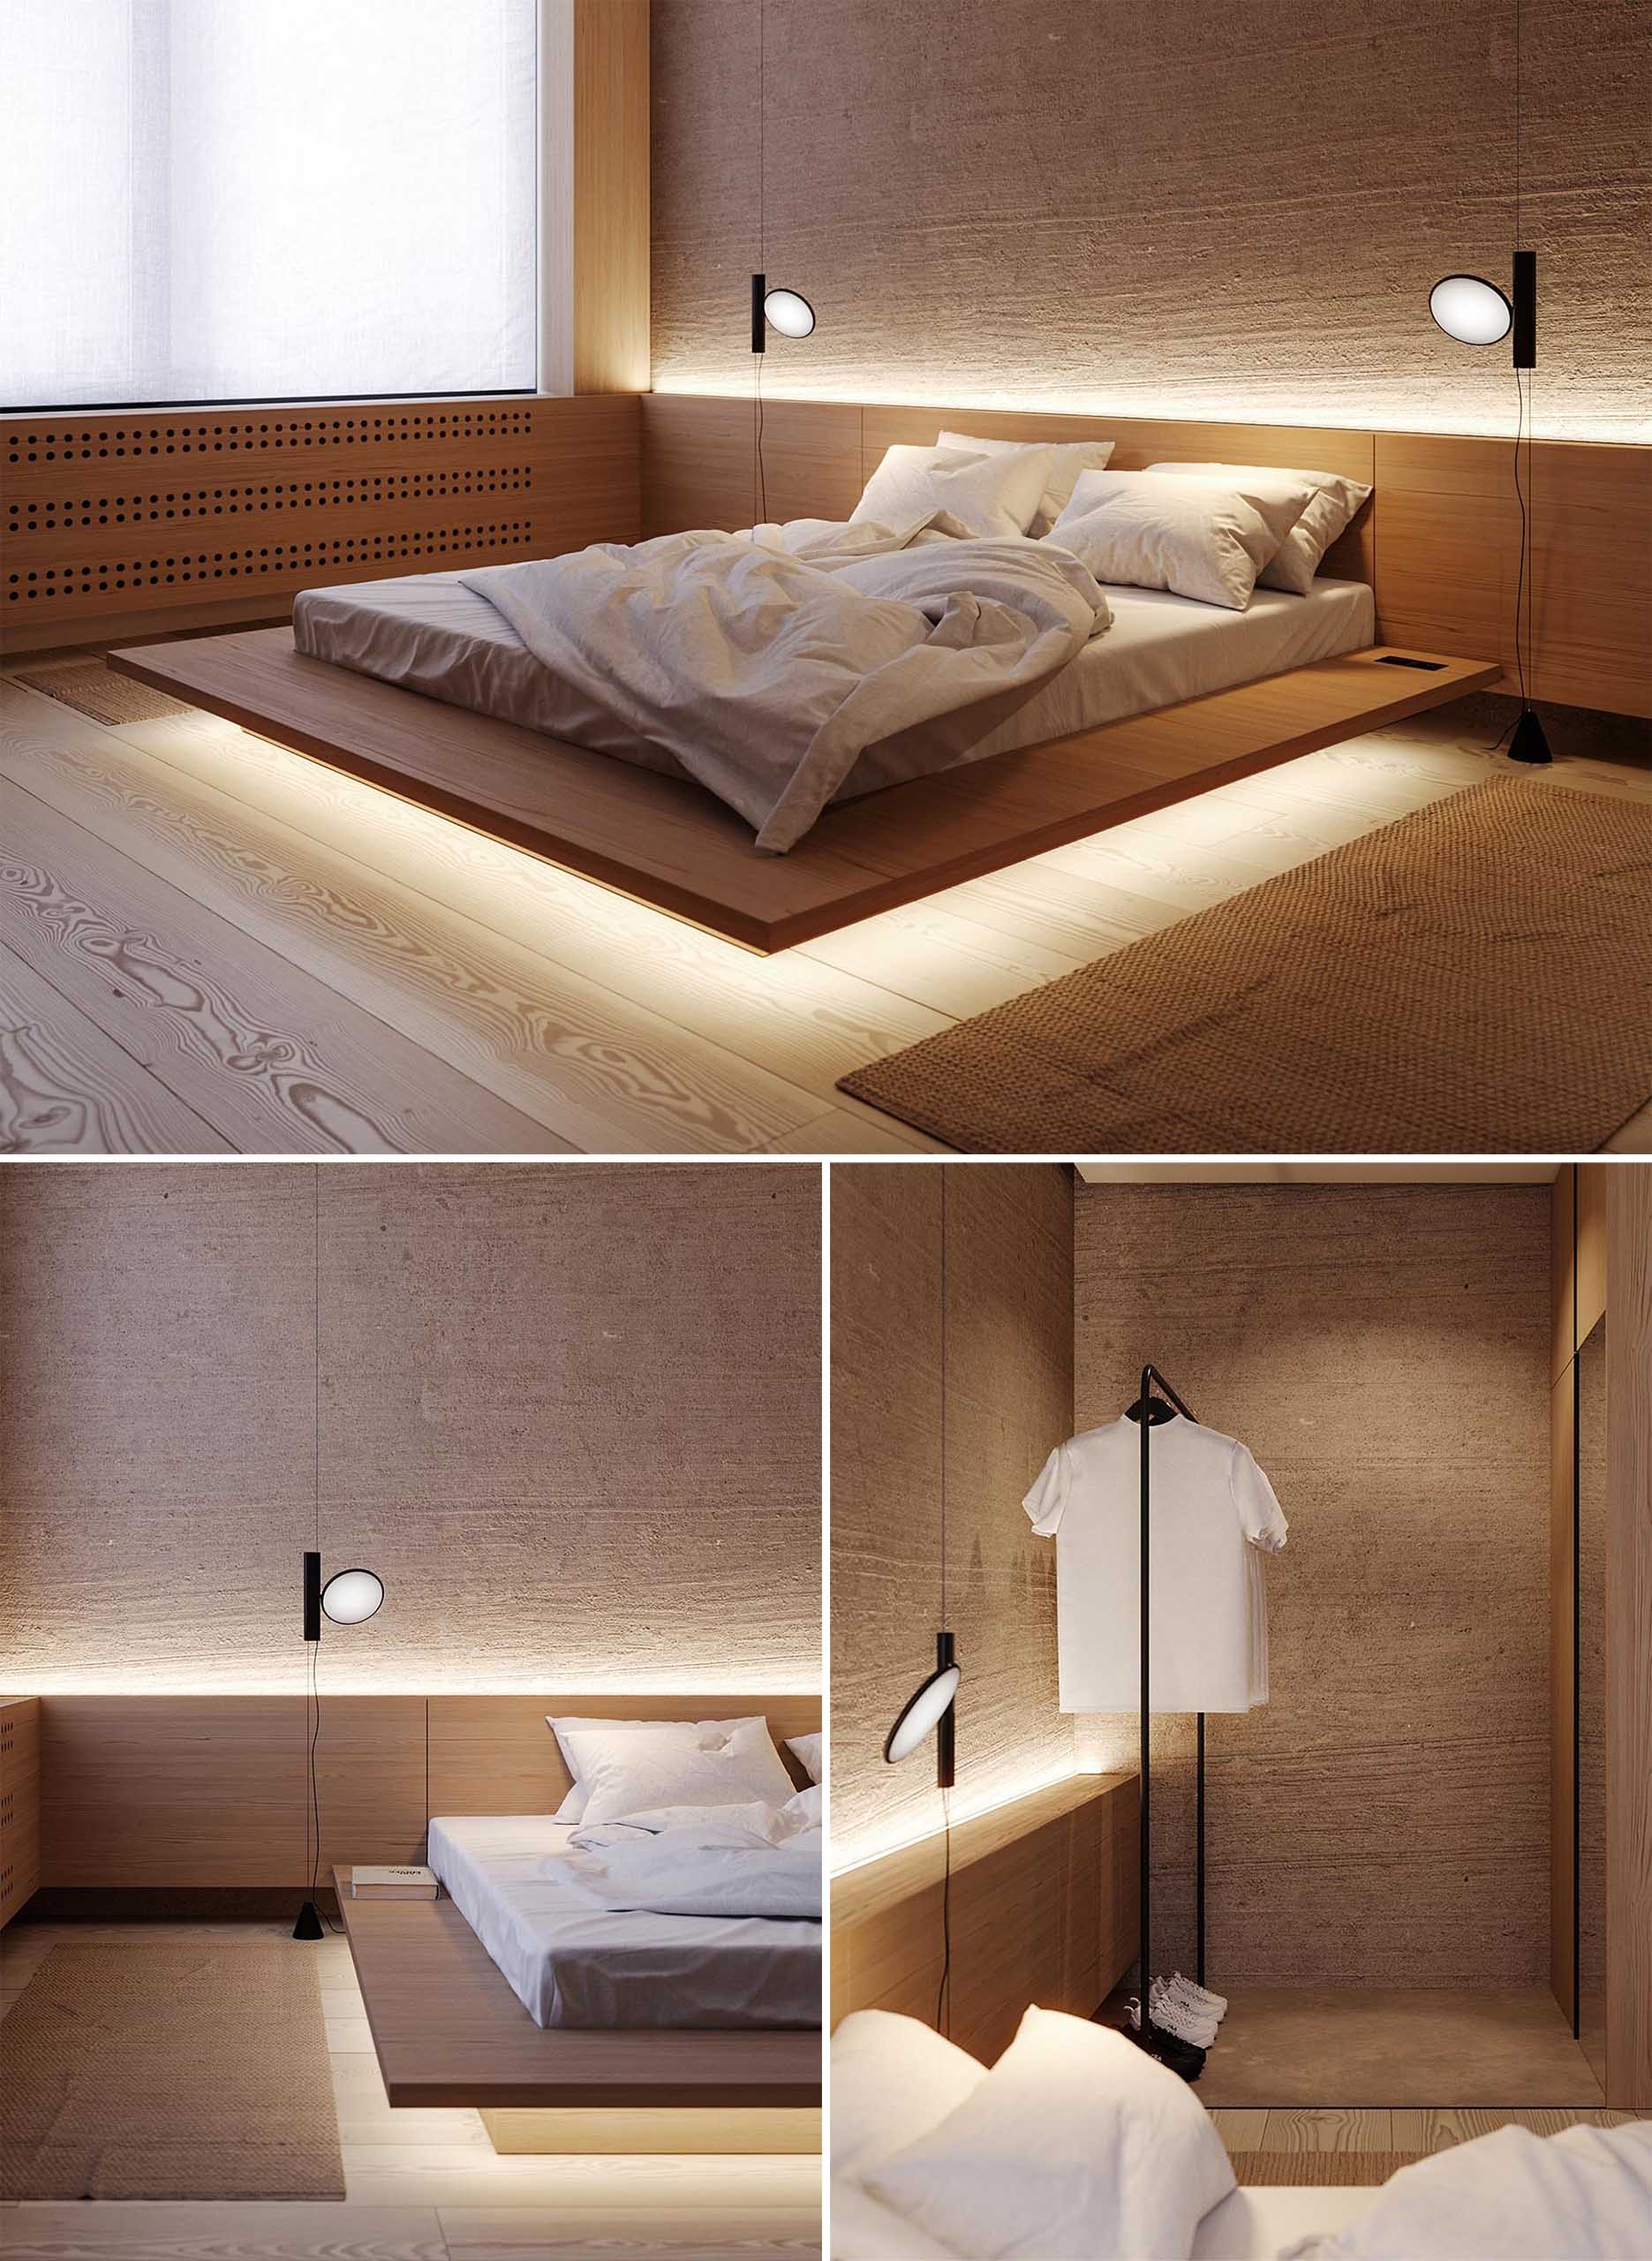 Led Lighting In Bedrooms, Led Bedroom Lights Ideas